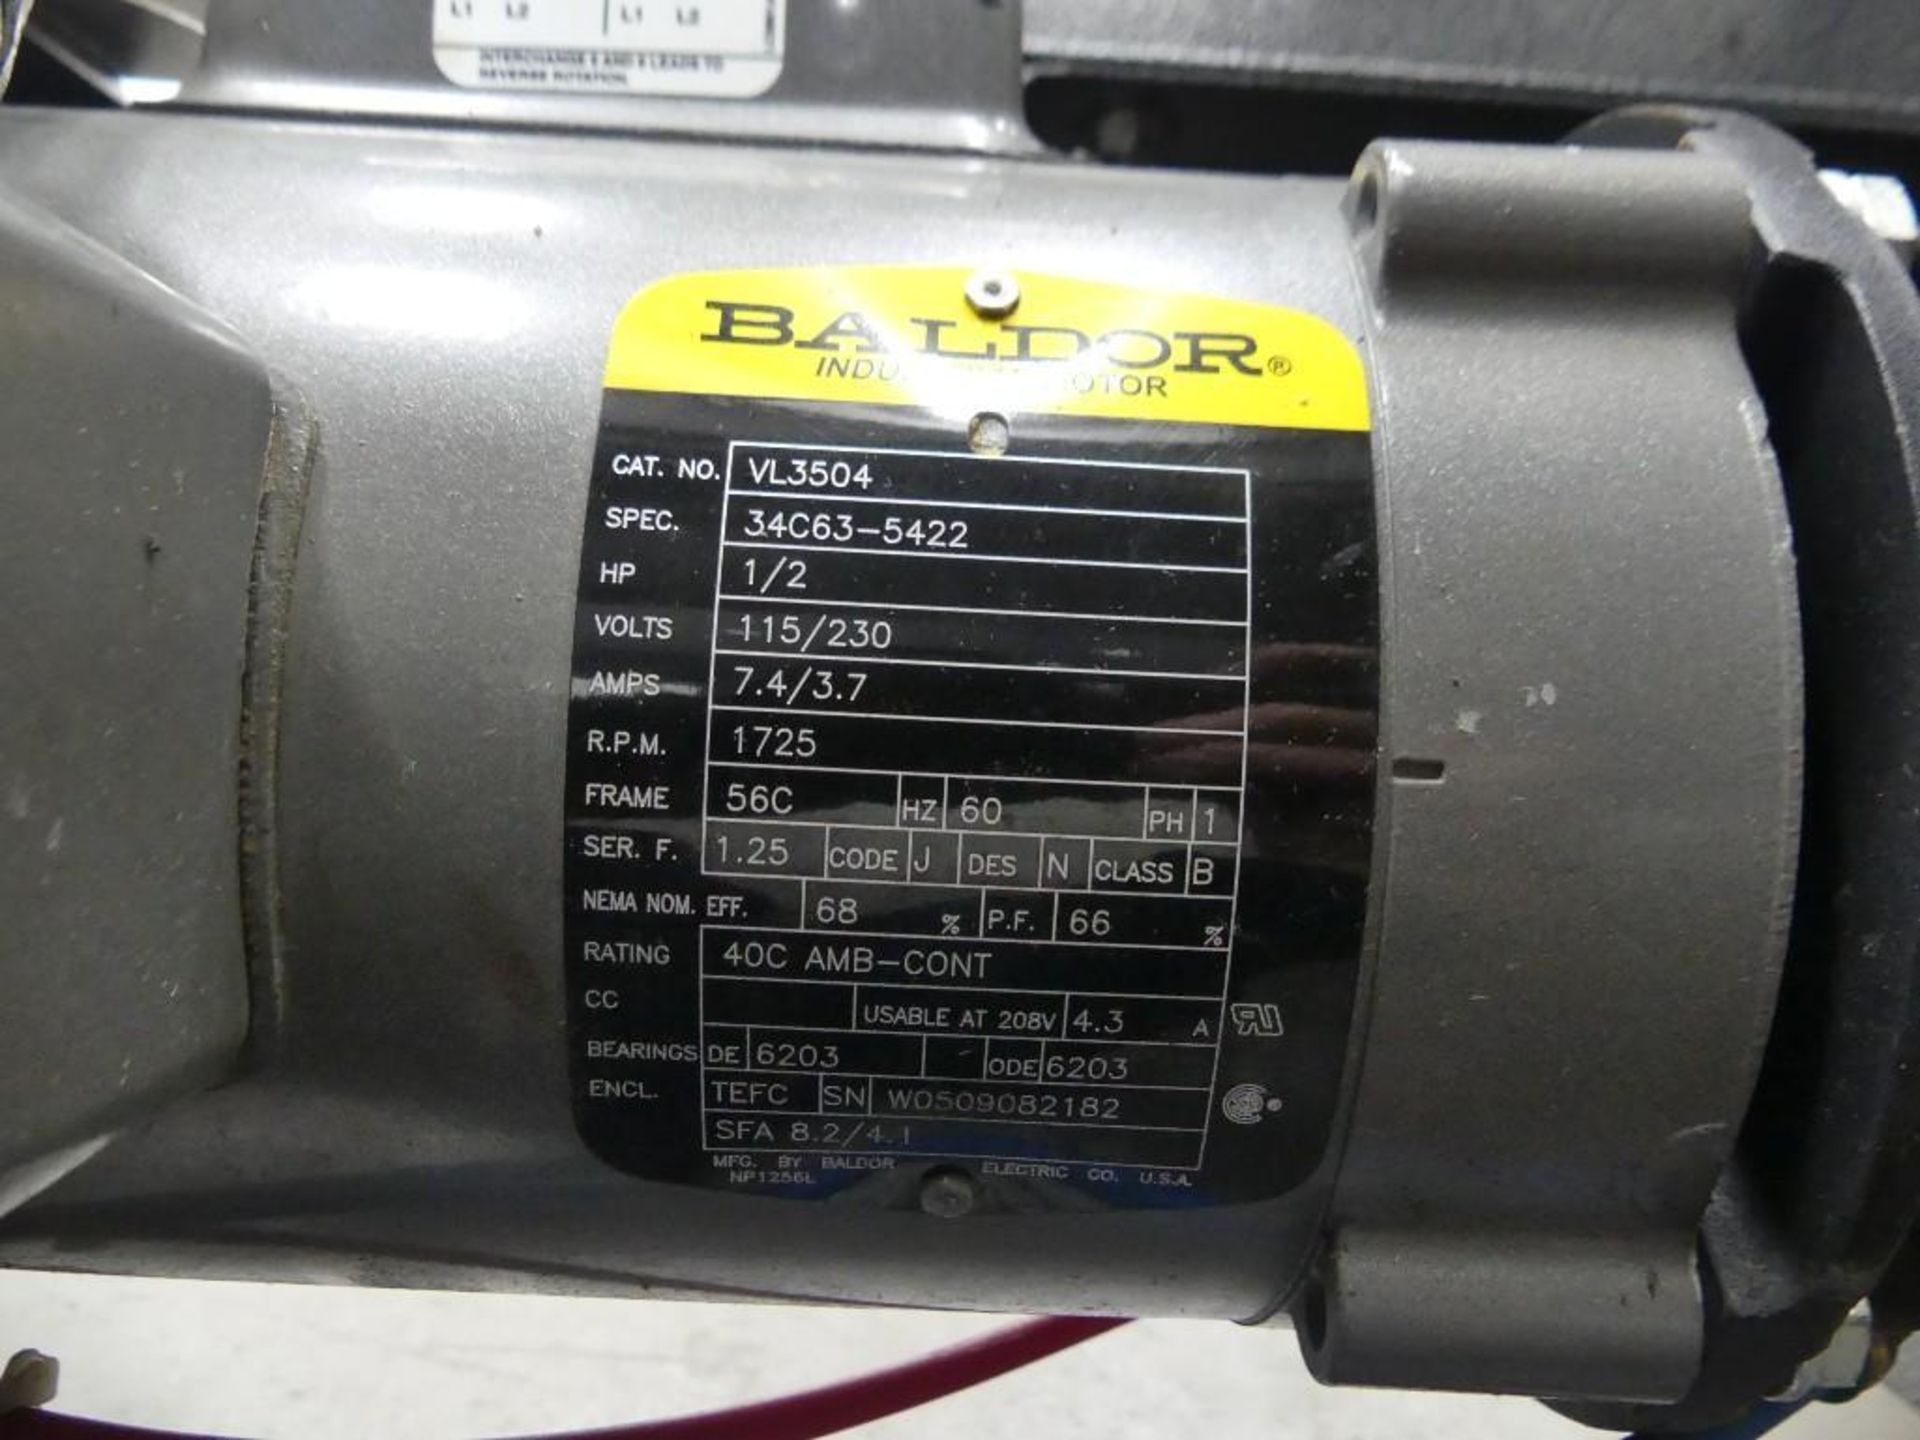 MARQ HPE412-3(RH)DL Tape Bottom Seal Case Erector - Image 5 of 50